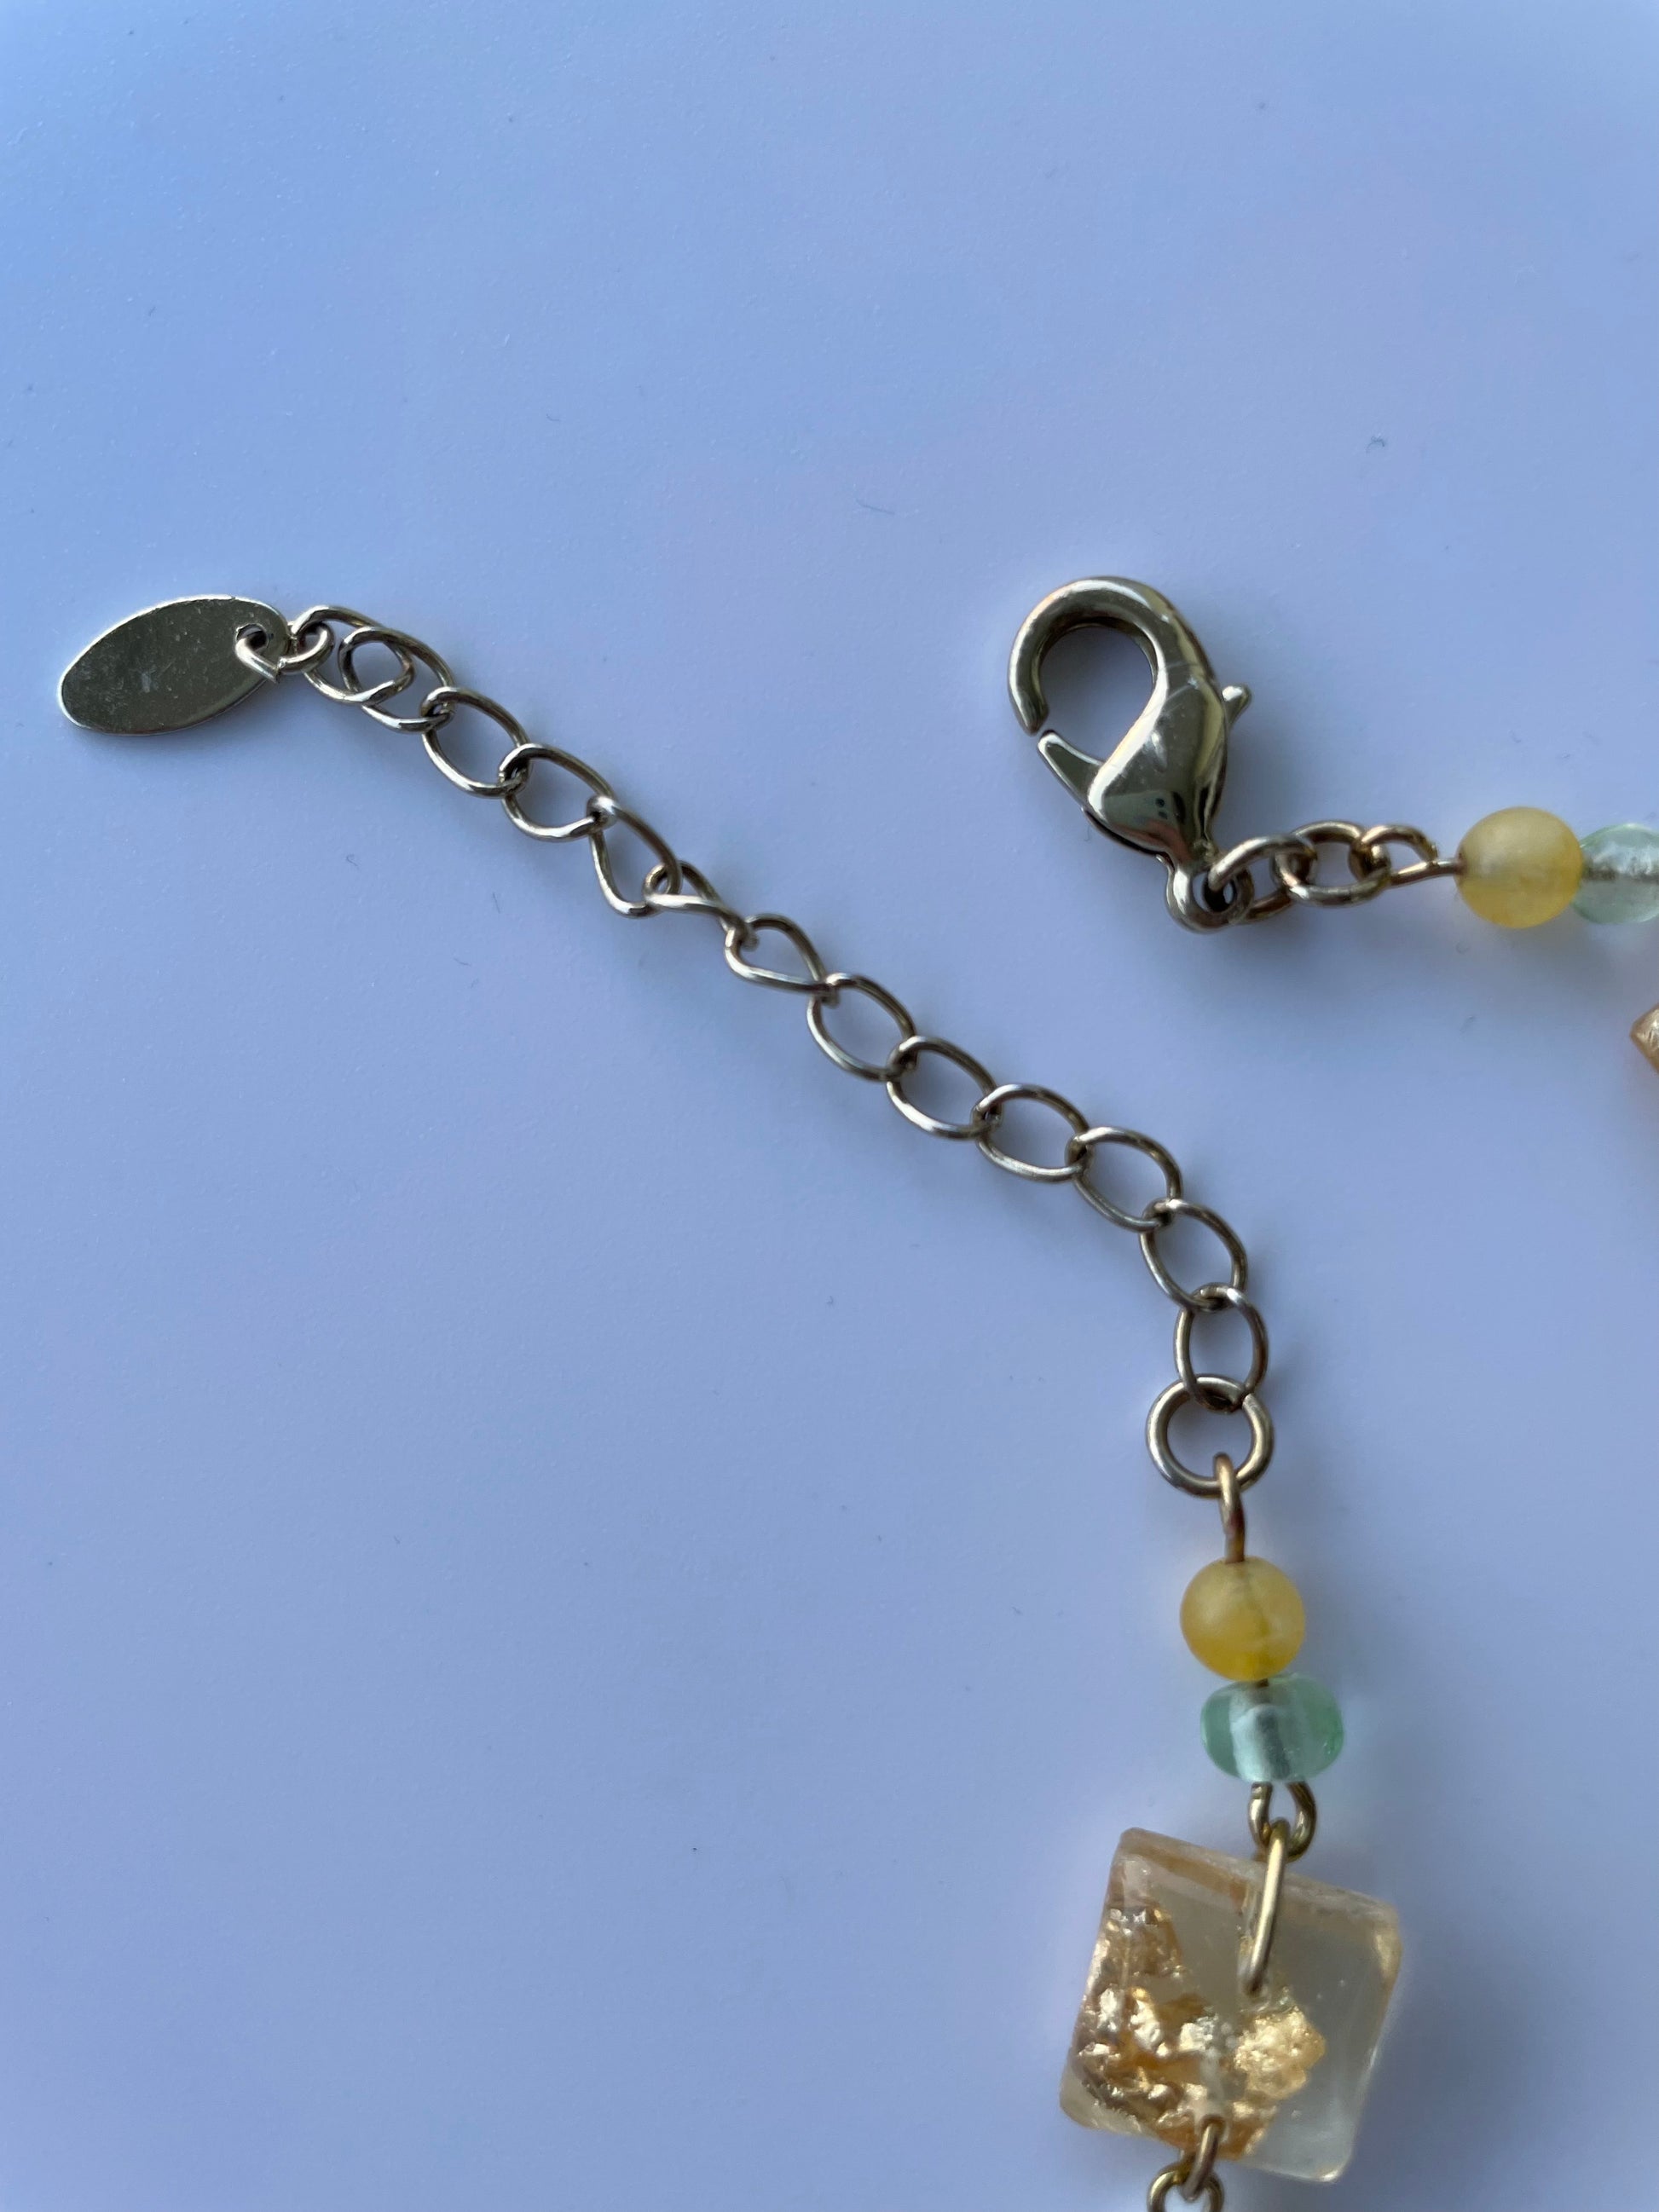 Upcycling bracelet sweet armcandy gold resin recycled beads handmade epoxy jewelry